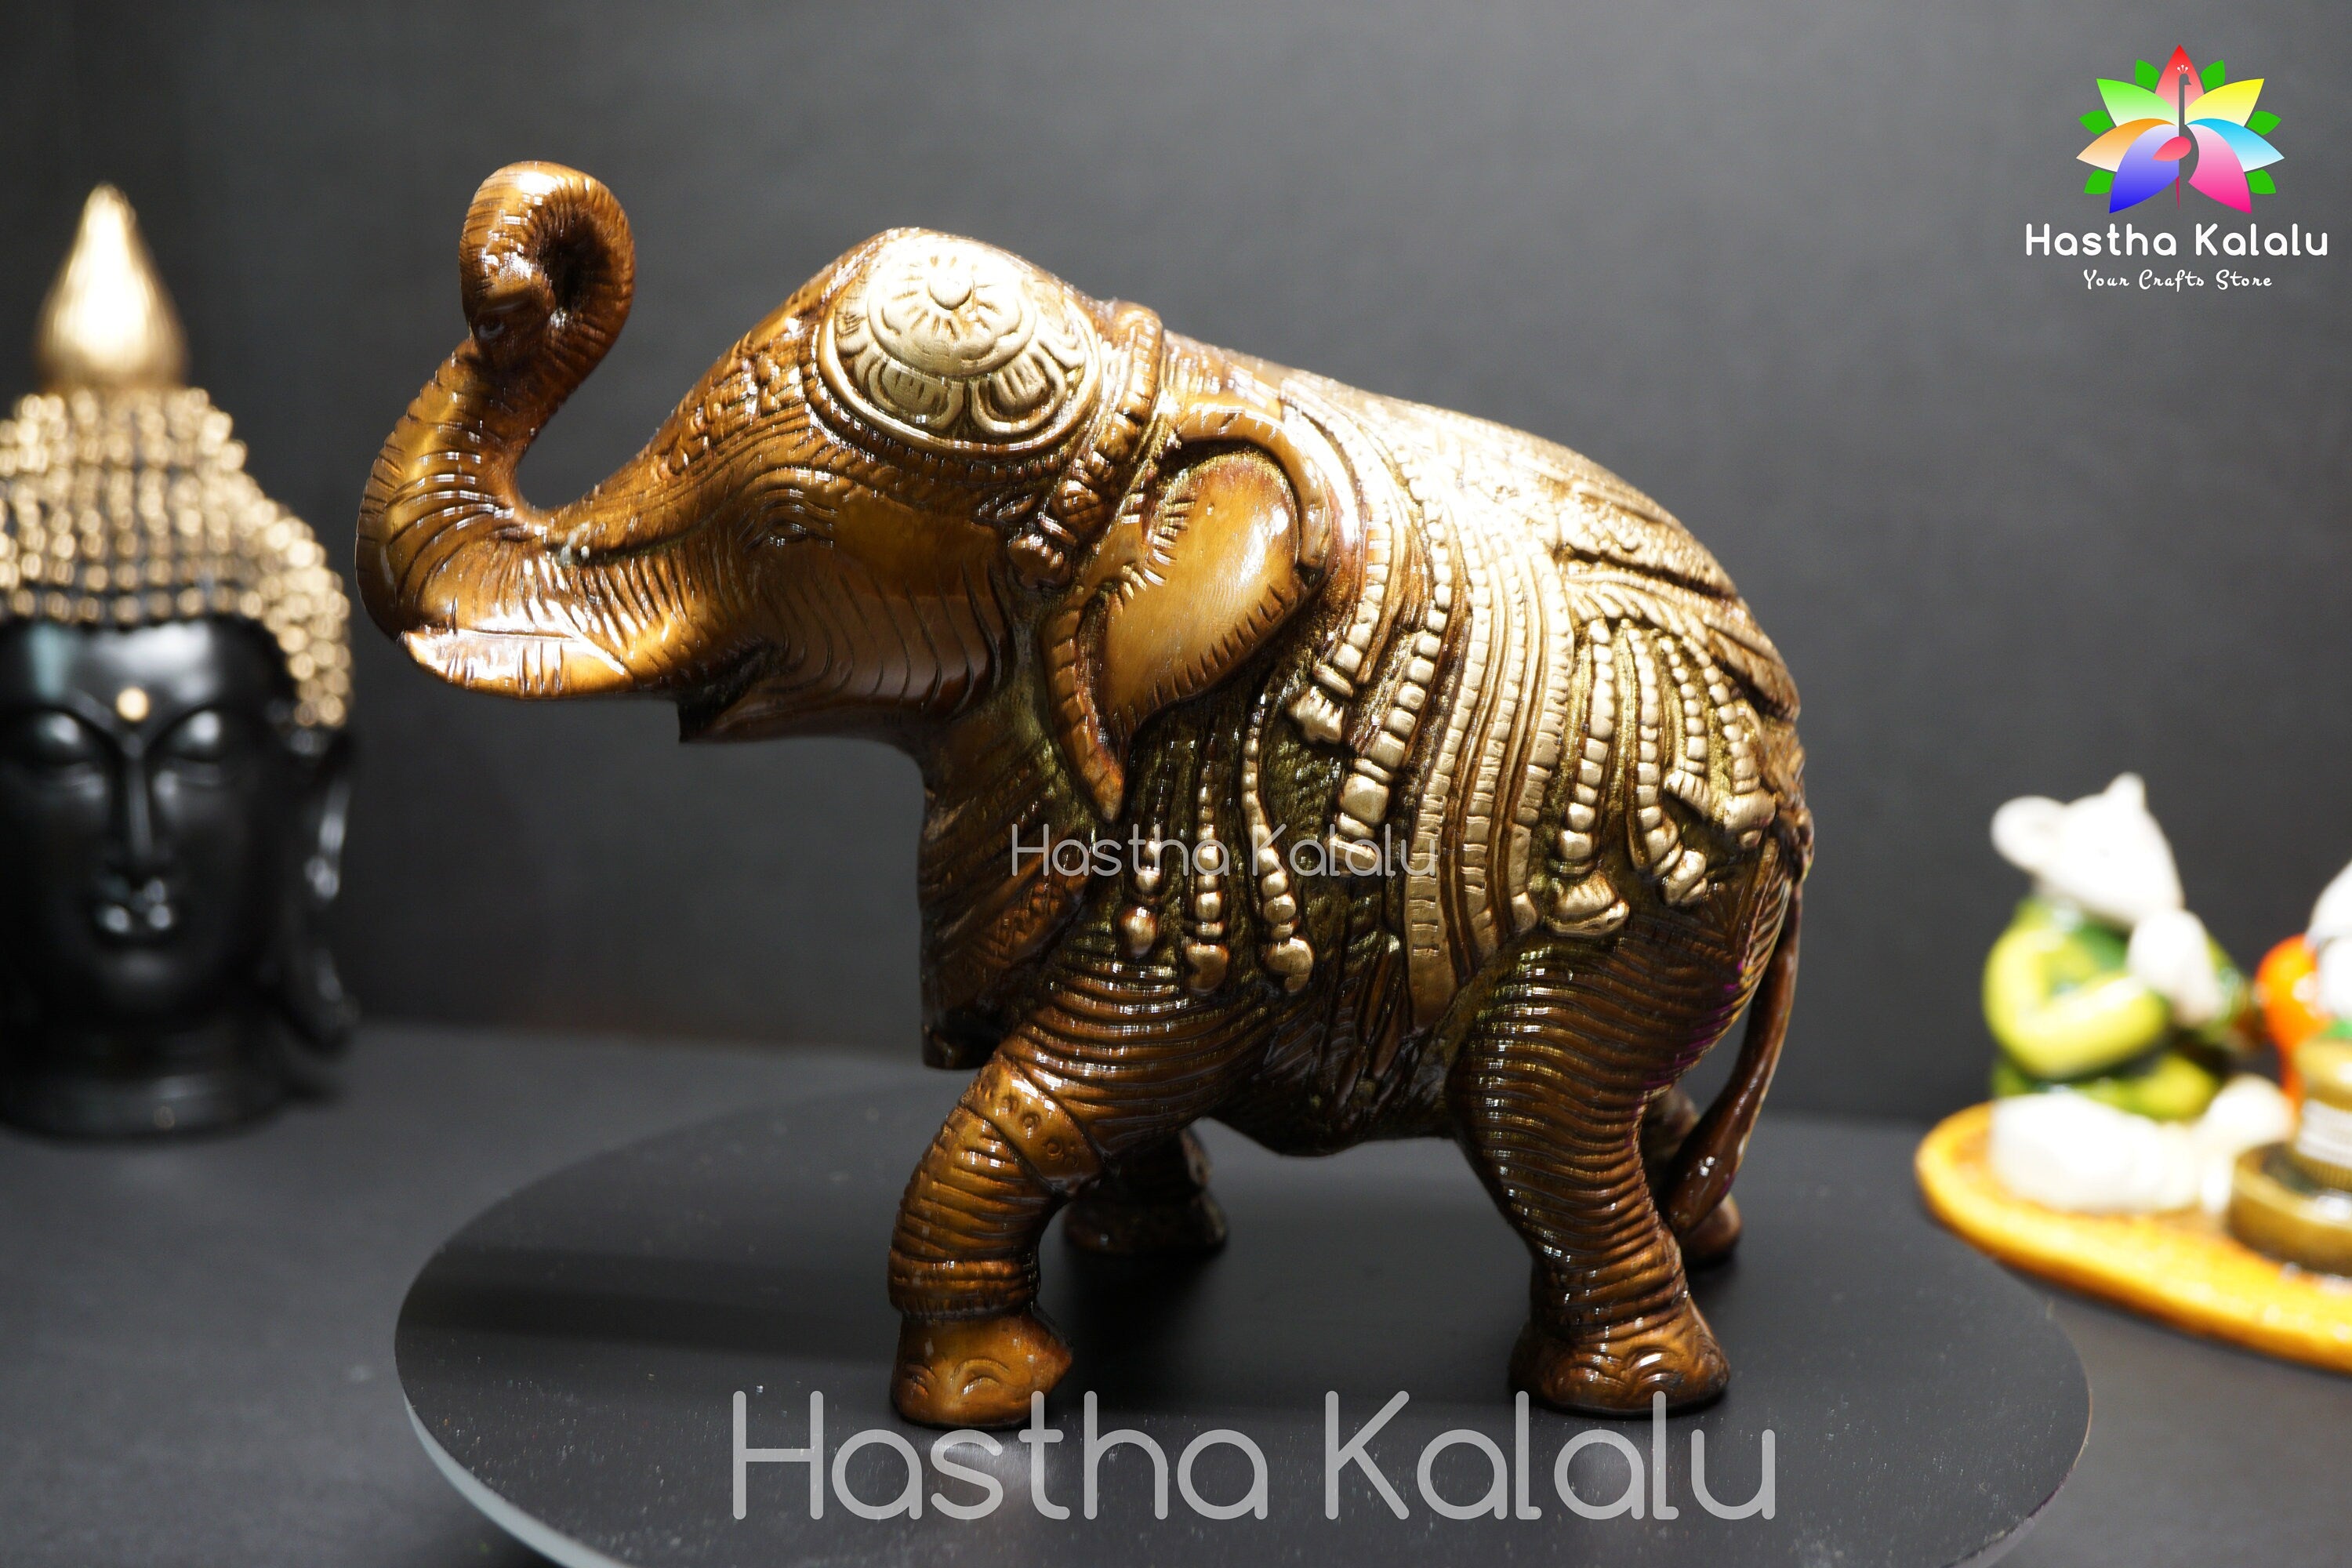 Brass Antique Finish Decorative Grandeur Hefty Elephant Figurine